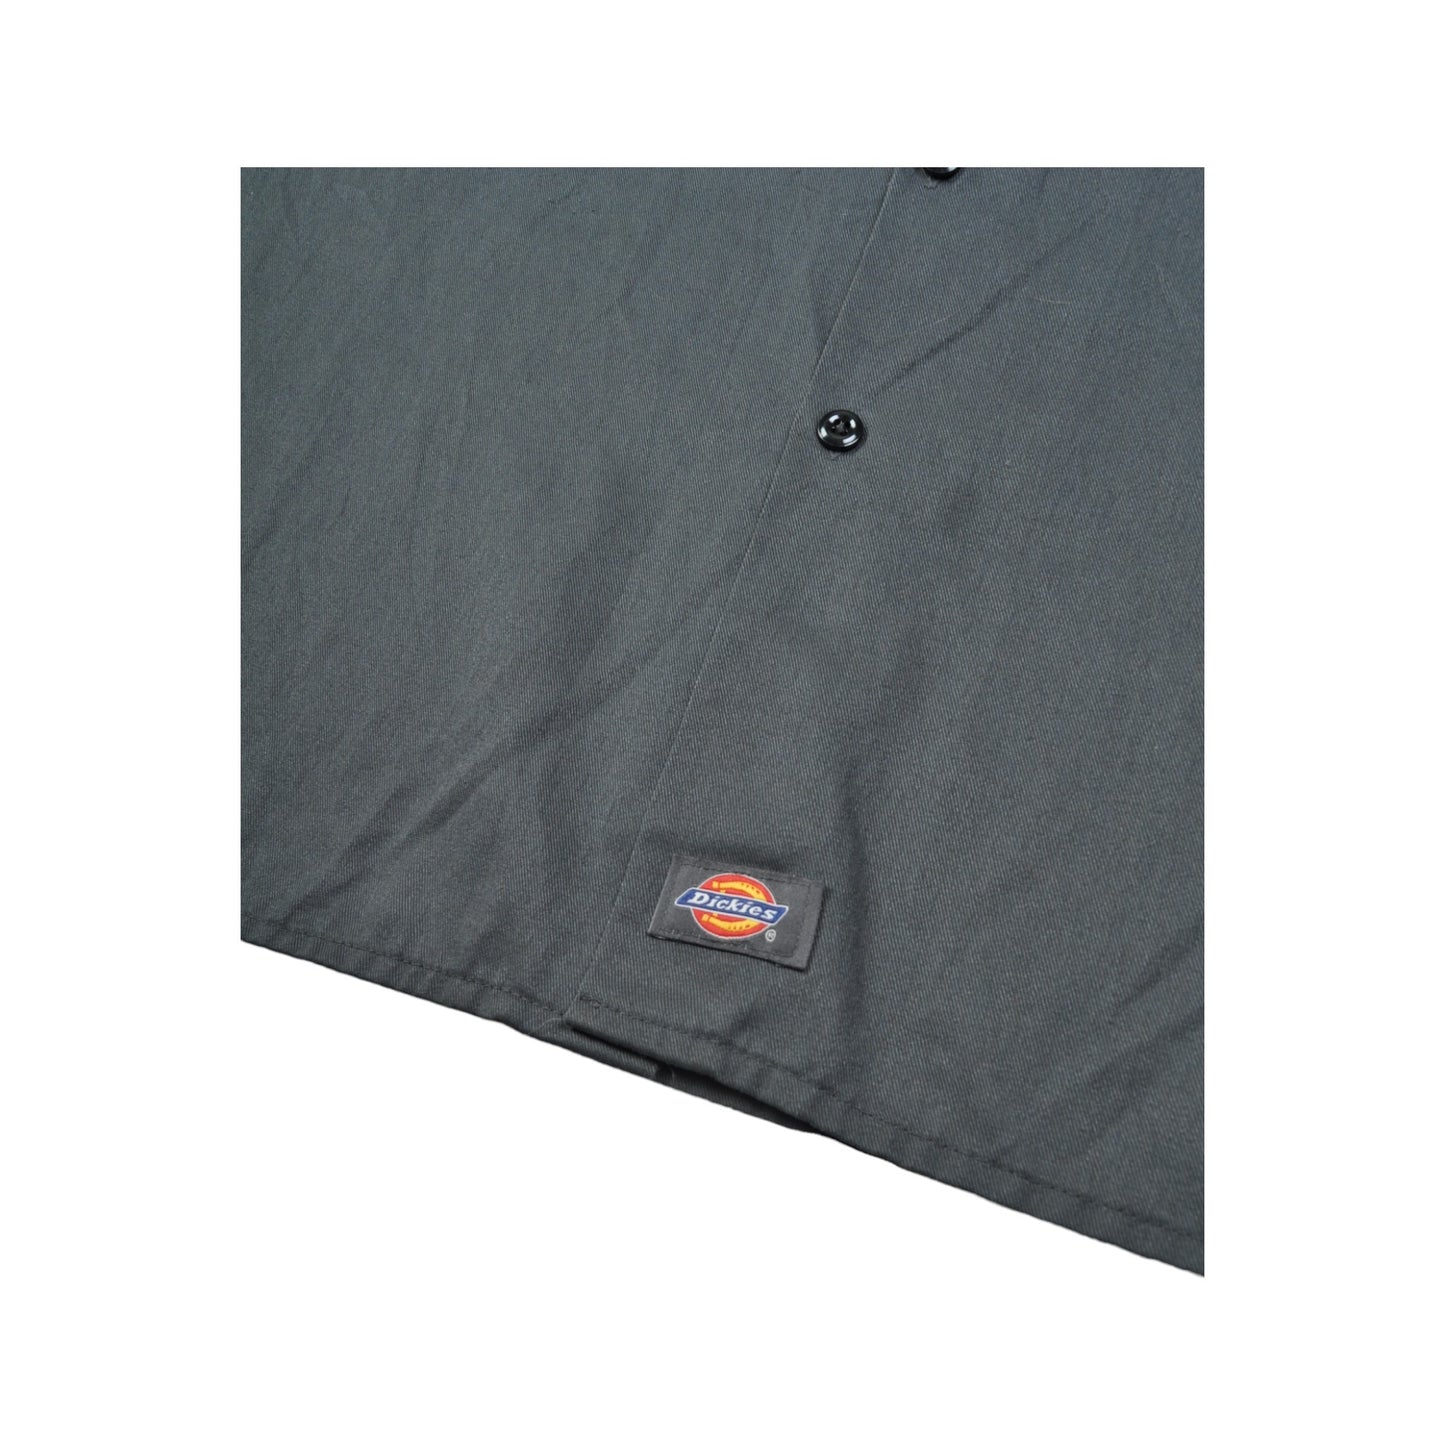 Vintage Dickies Workwear Shirt Short Sleeve Grey XXL